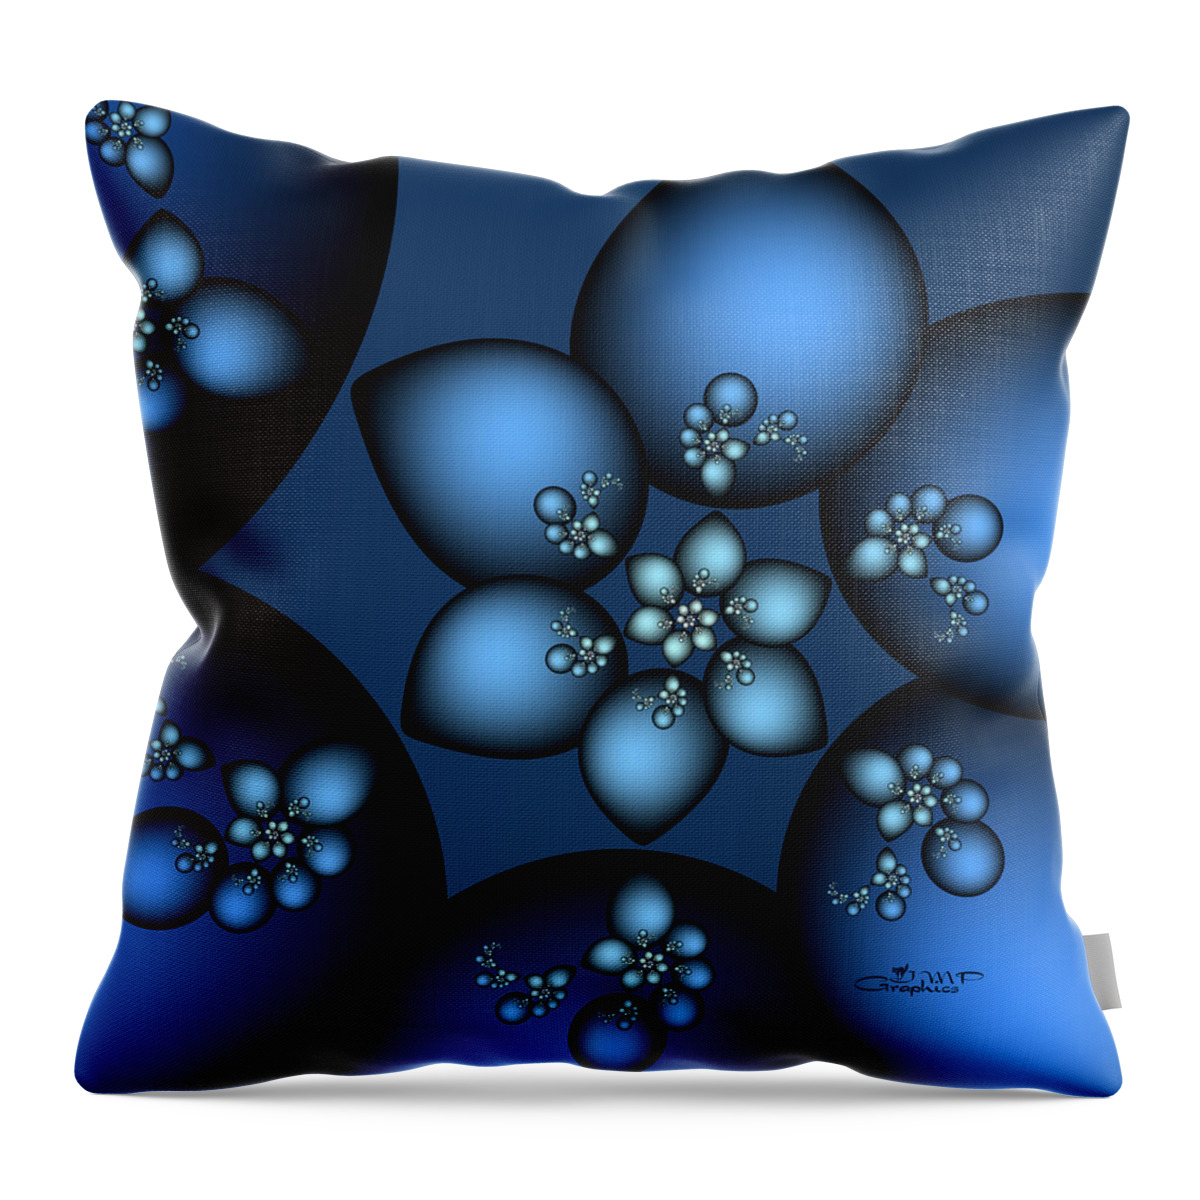 Fractal Throw Pillow featuring the digital art Something Blue by Jutta Maria Pusl